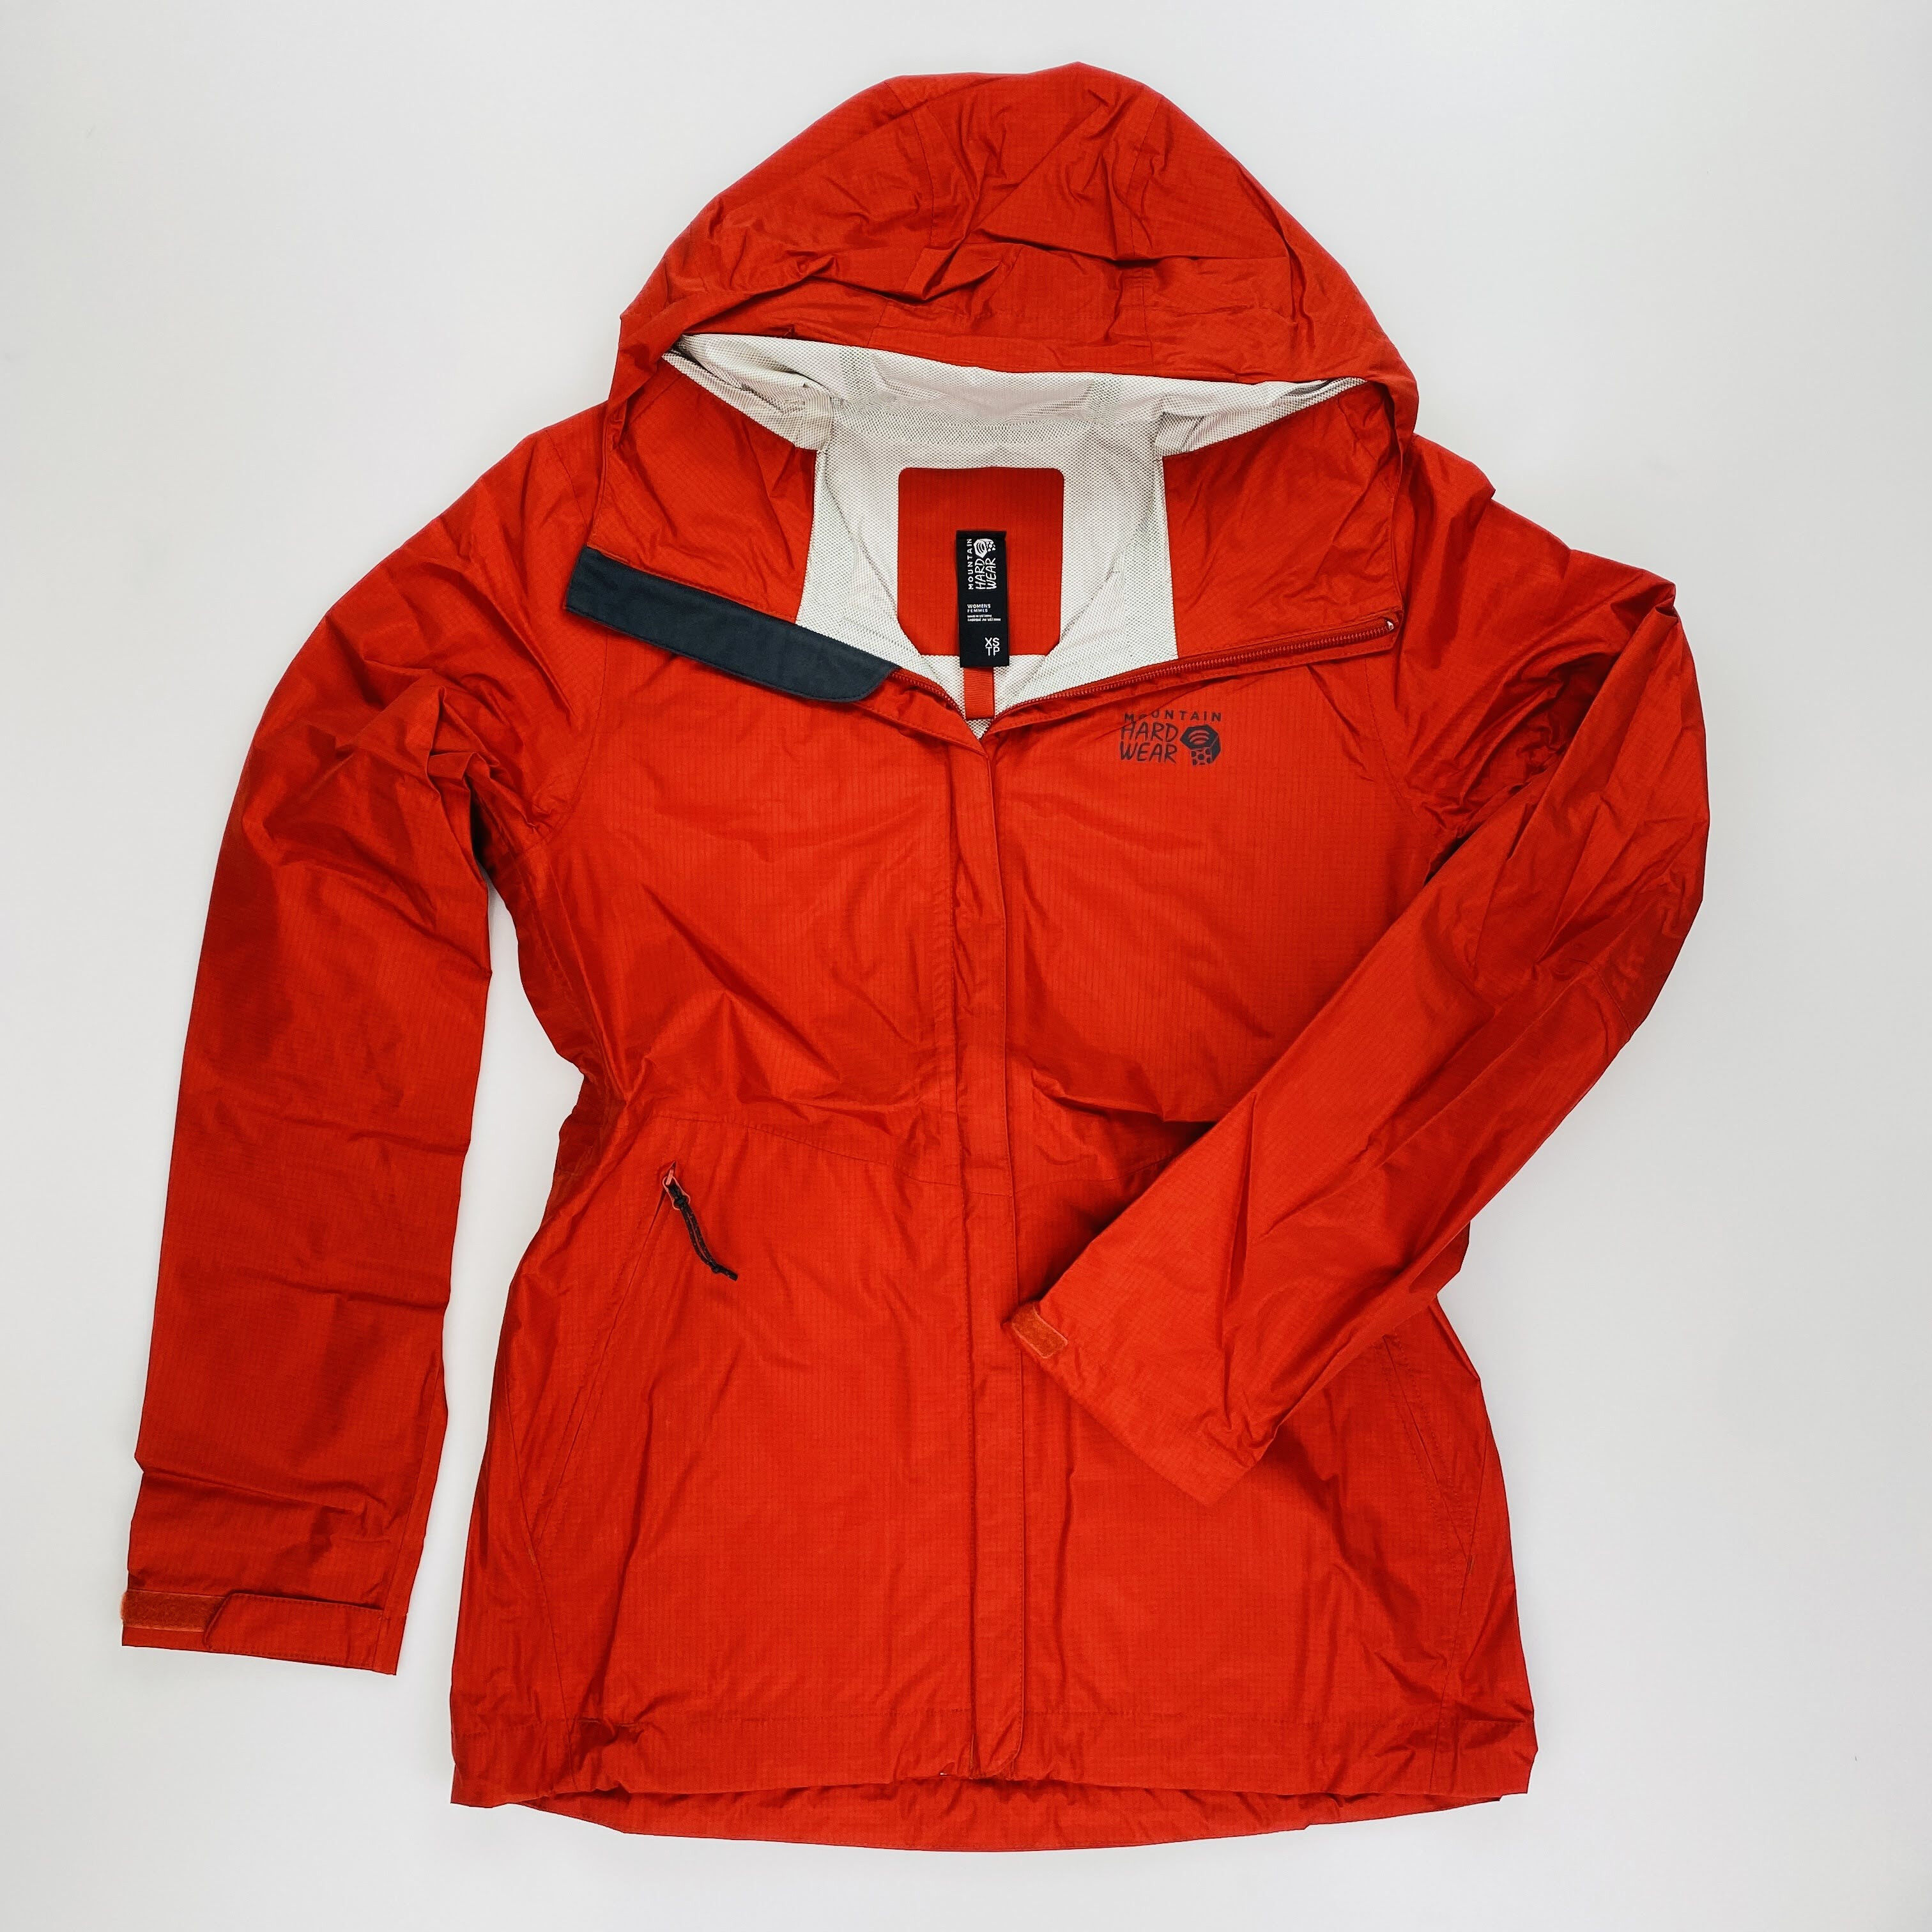 Mountain Hardwear Acadia Woman Jacket - Giacca antipioggia di seconda mano - Donna - Rosso - XS | Hardloop